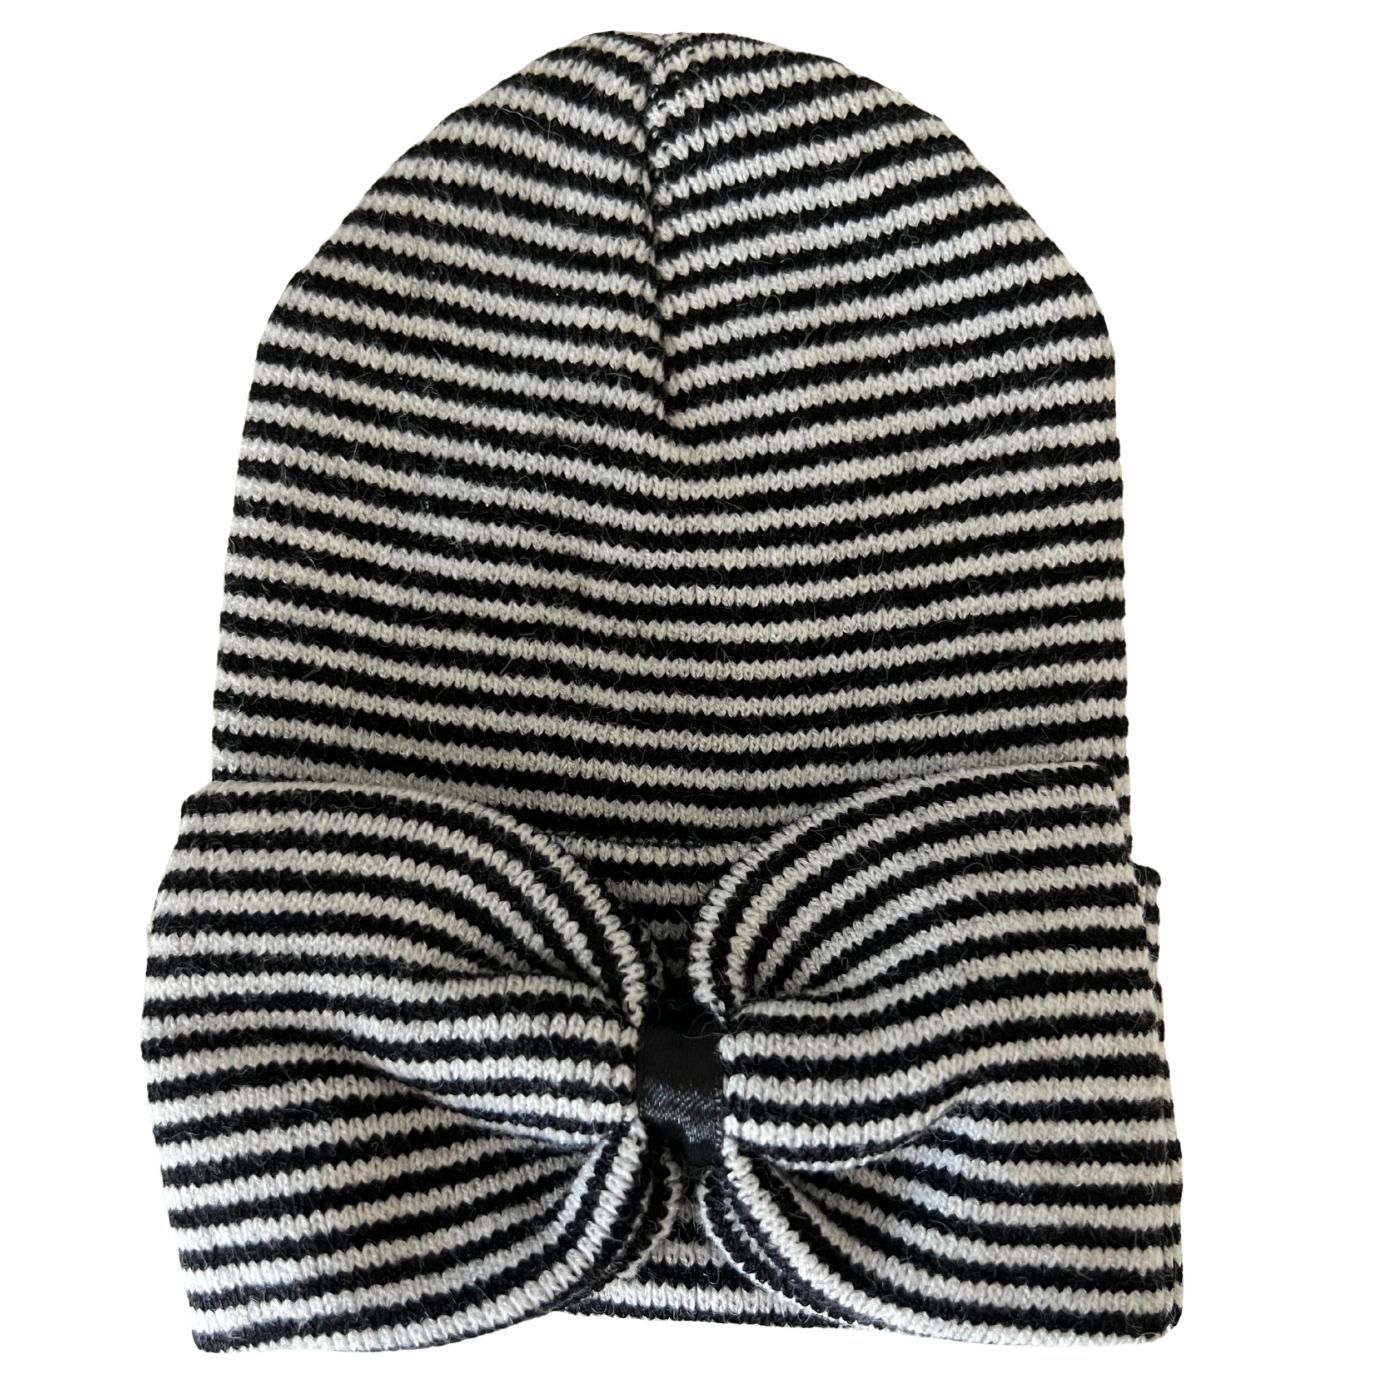 Baby's First Hat, Black/White Stripe Bow